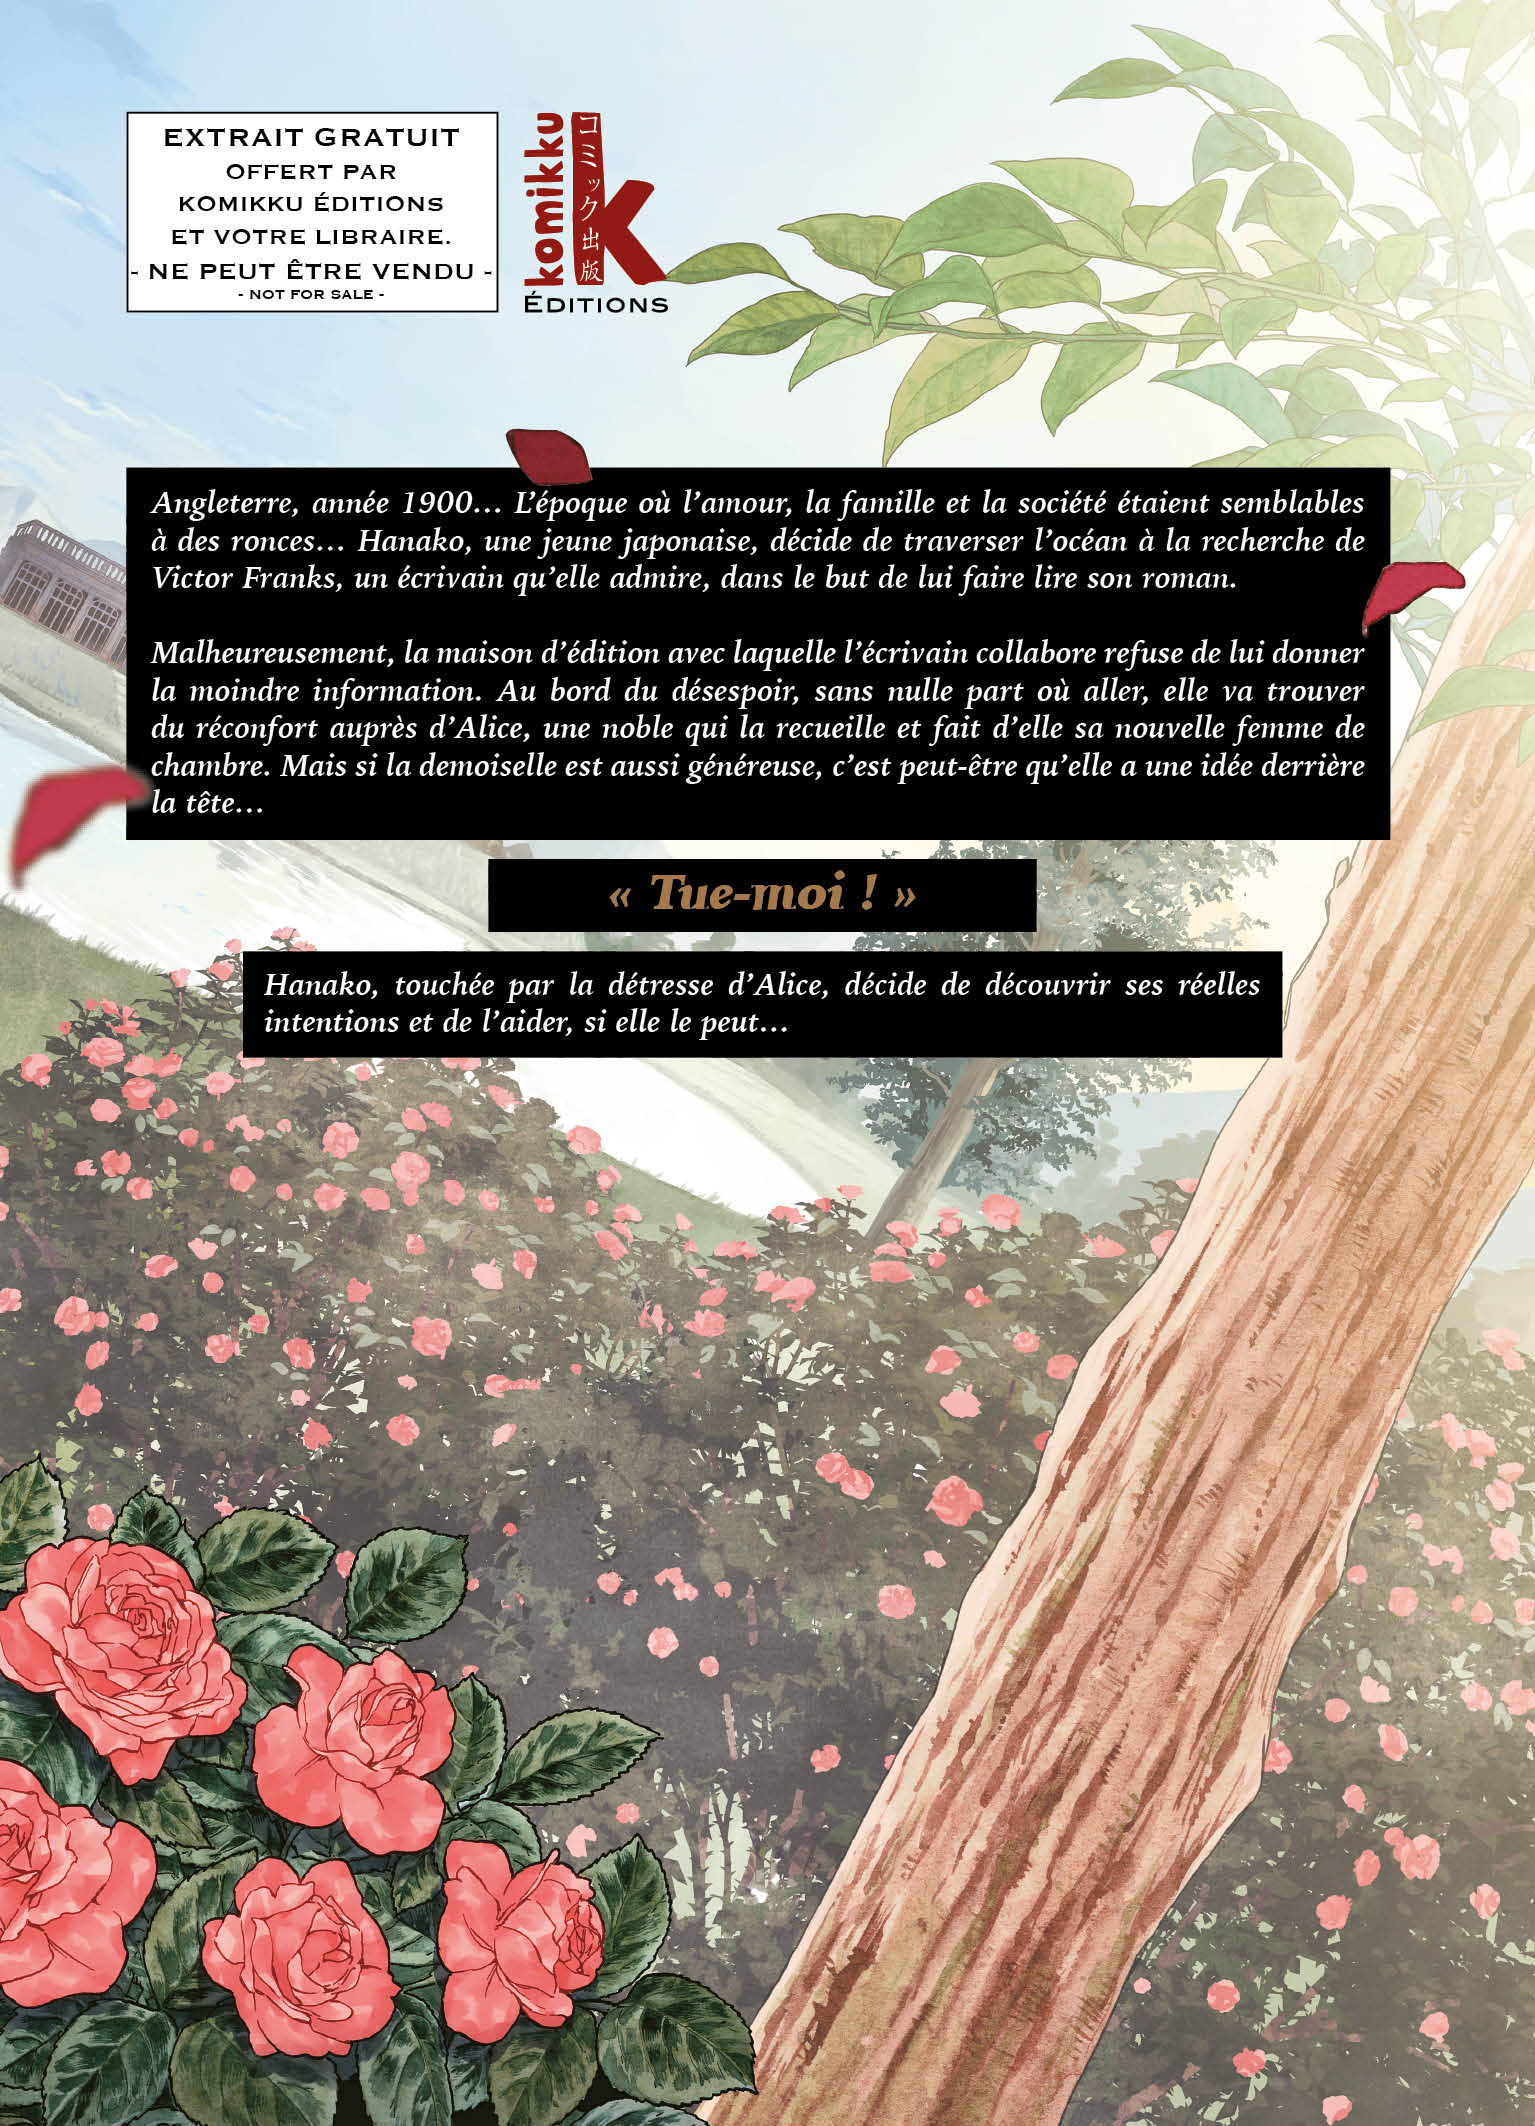 Goodbye my rose Garden page 44